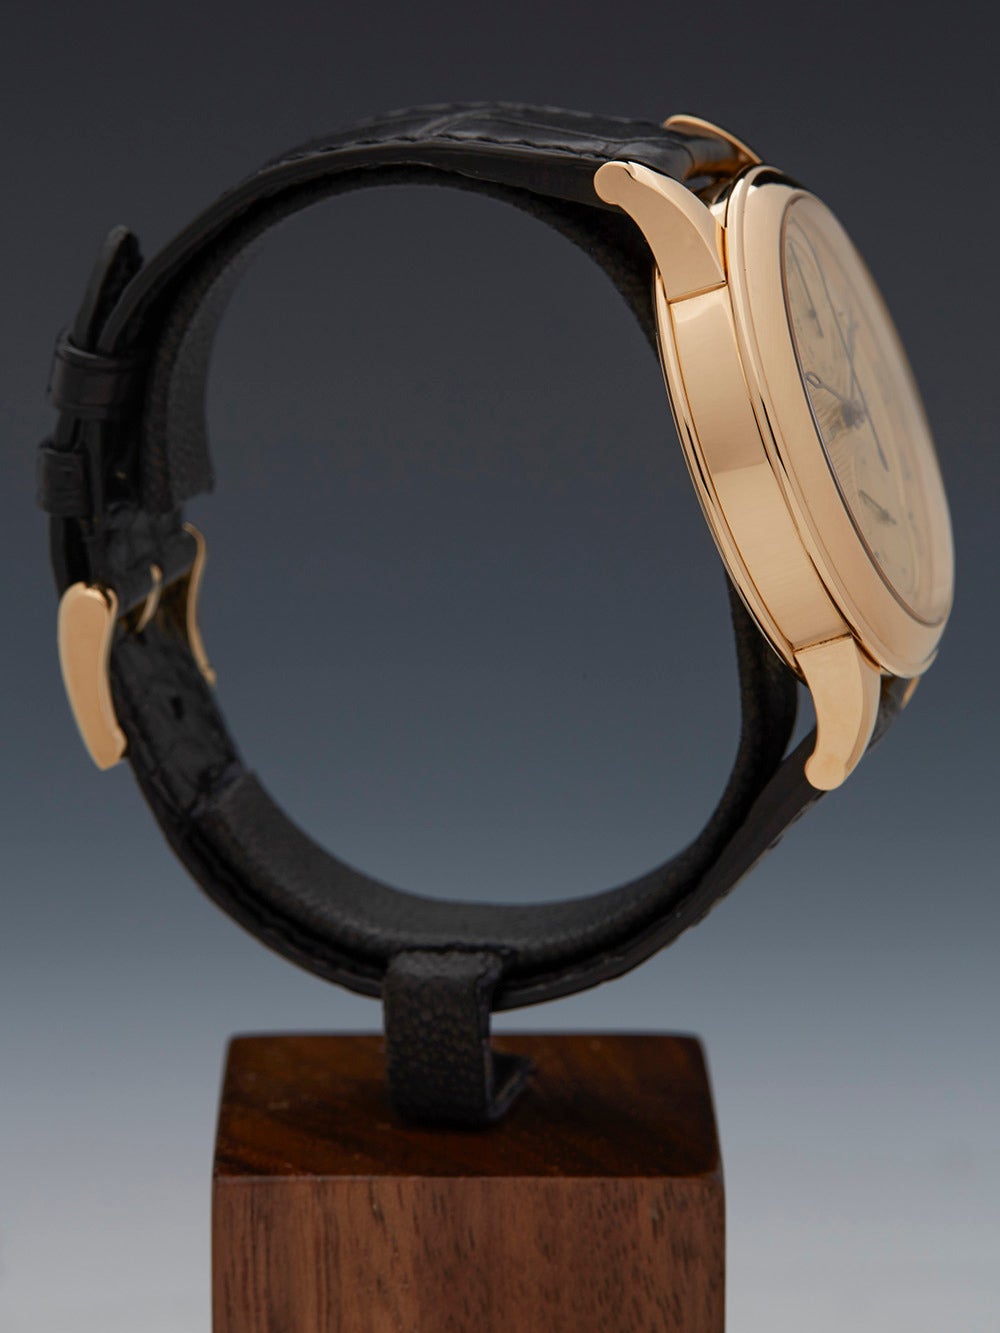 L.Leroy Rose Gold Osmior No. 1827 Monopusher Chronograph Wristwatch Ref LL101-3 2